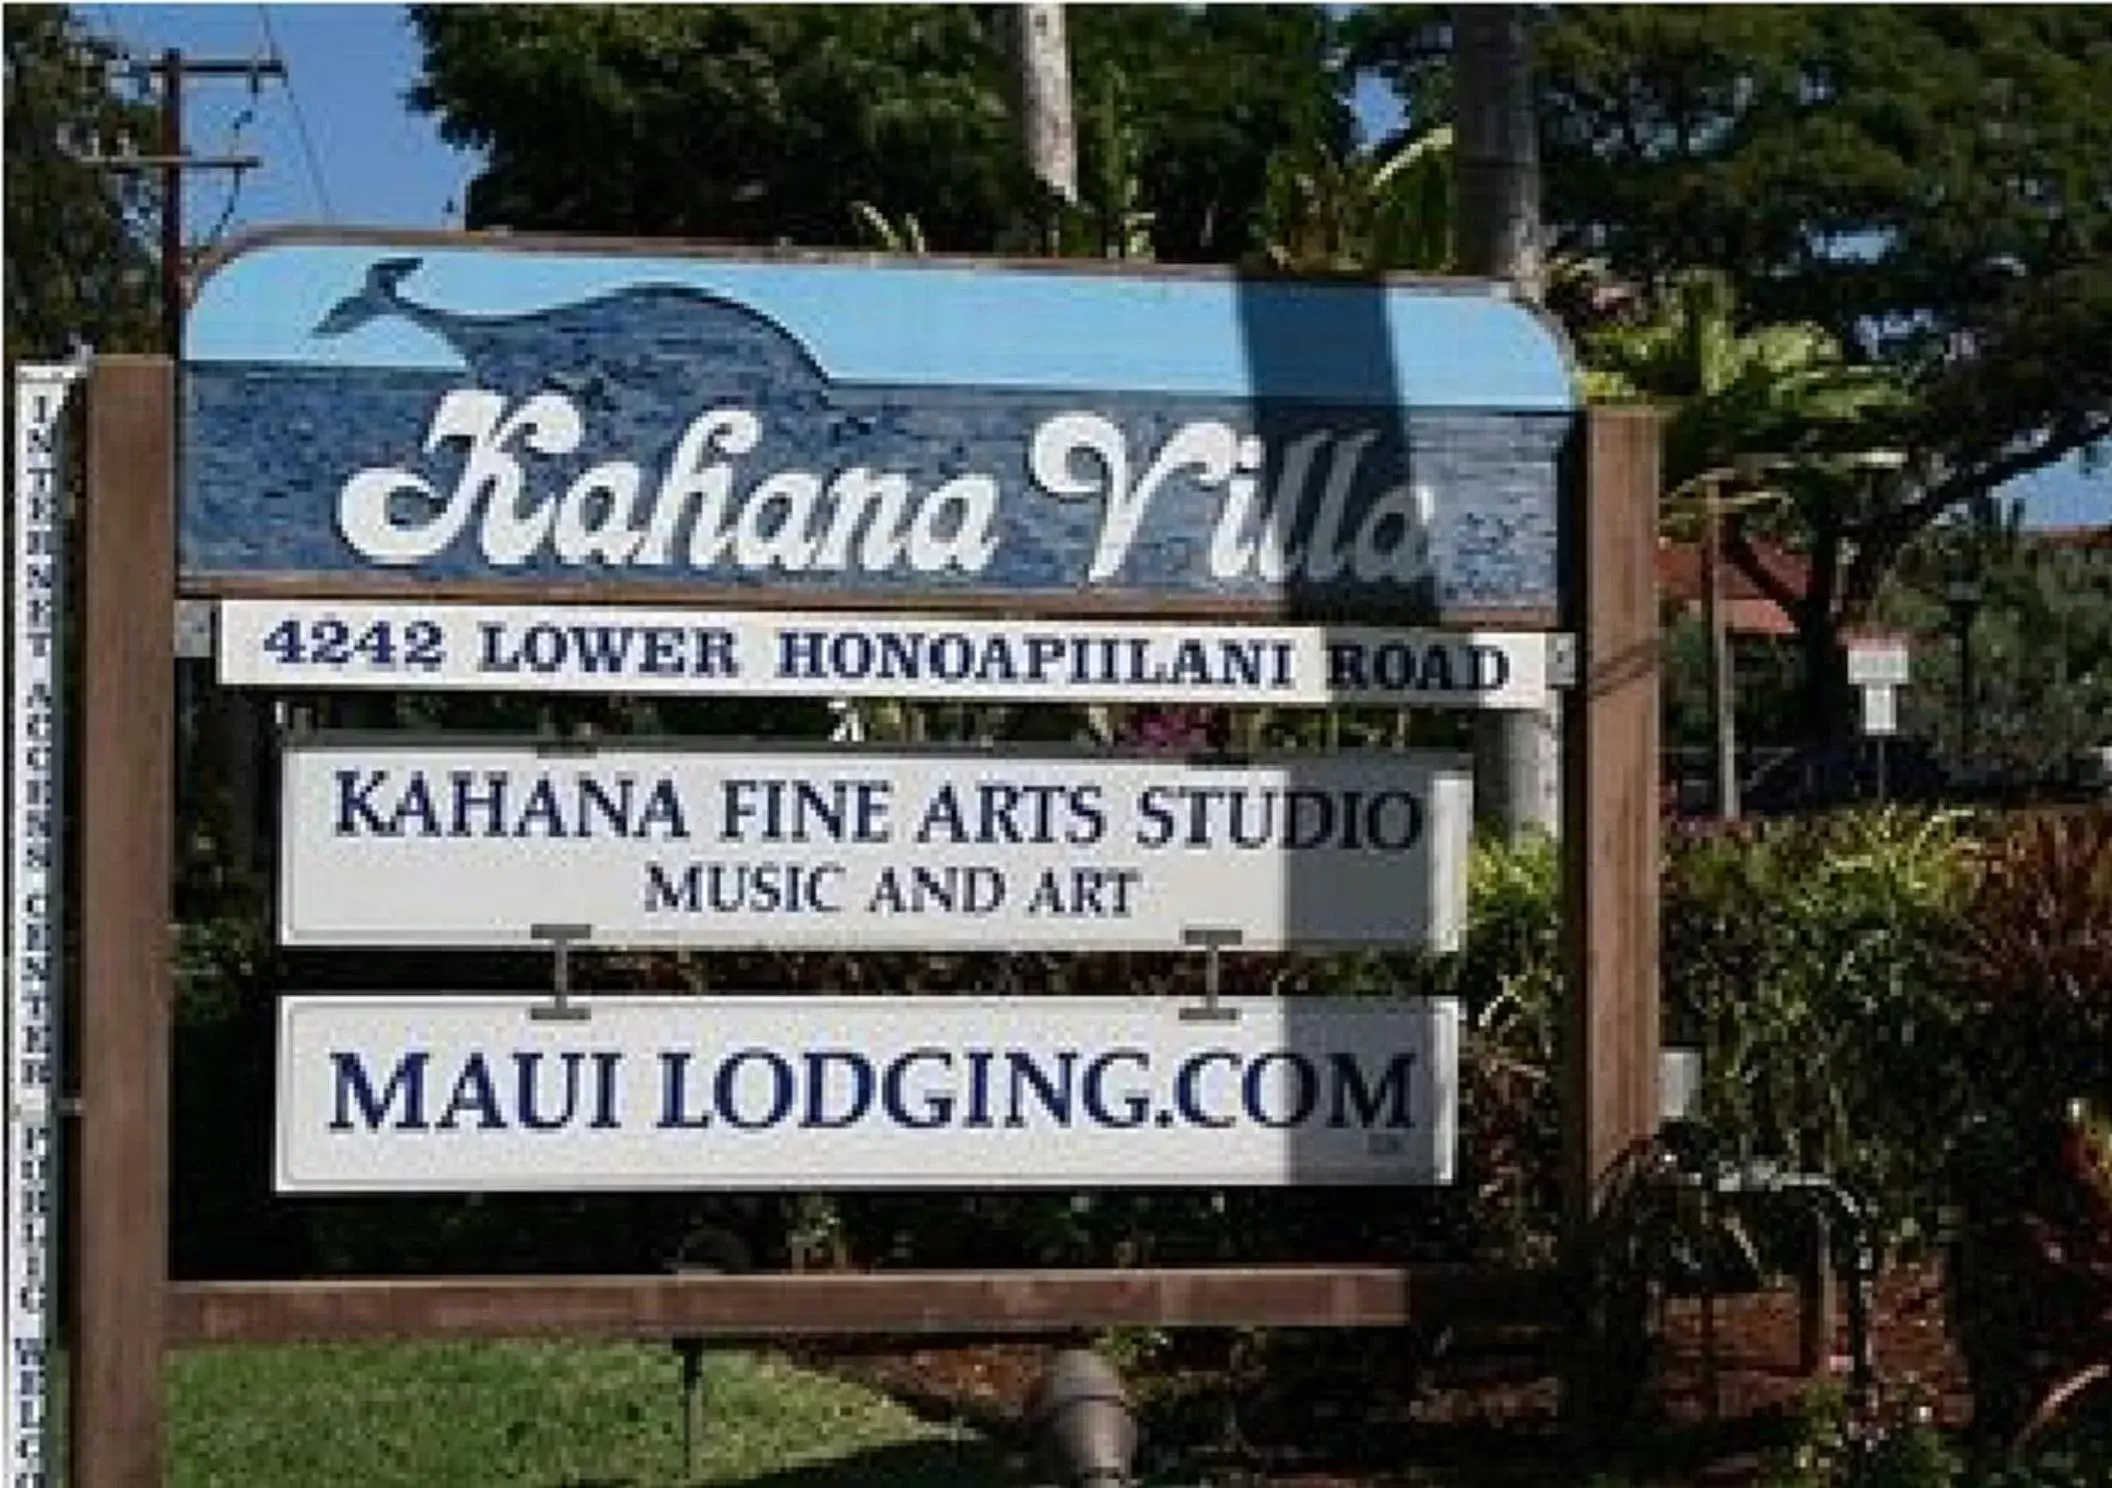 Logo/Certificate/Sign in Kahana Villa